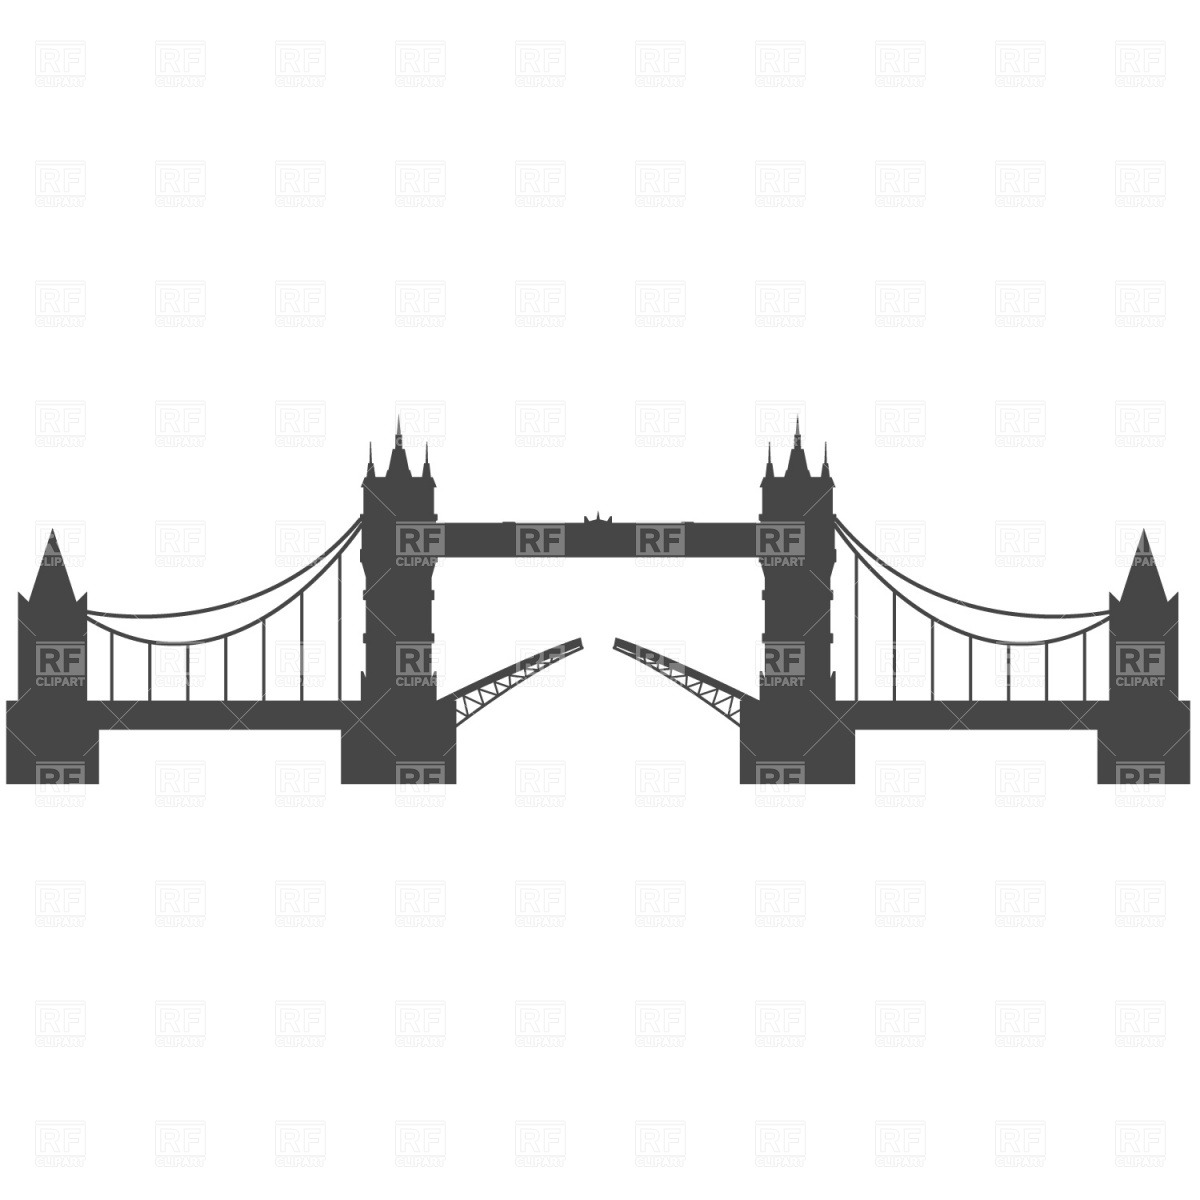 Tower Bridge London 968 Architecture Buildings Download Royalty